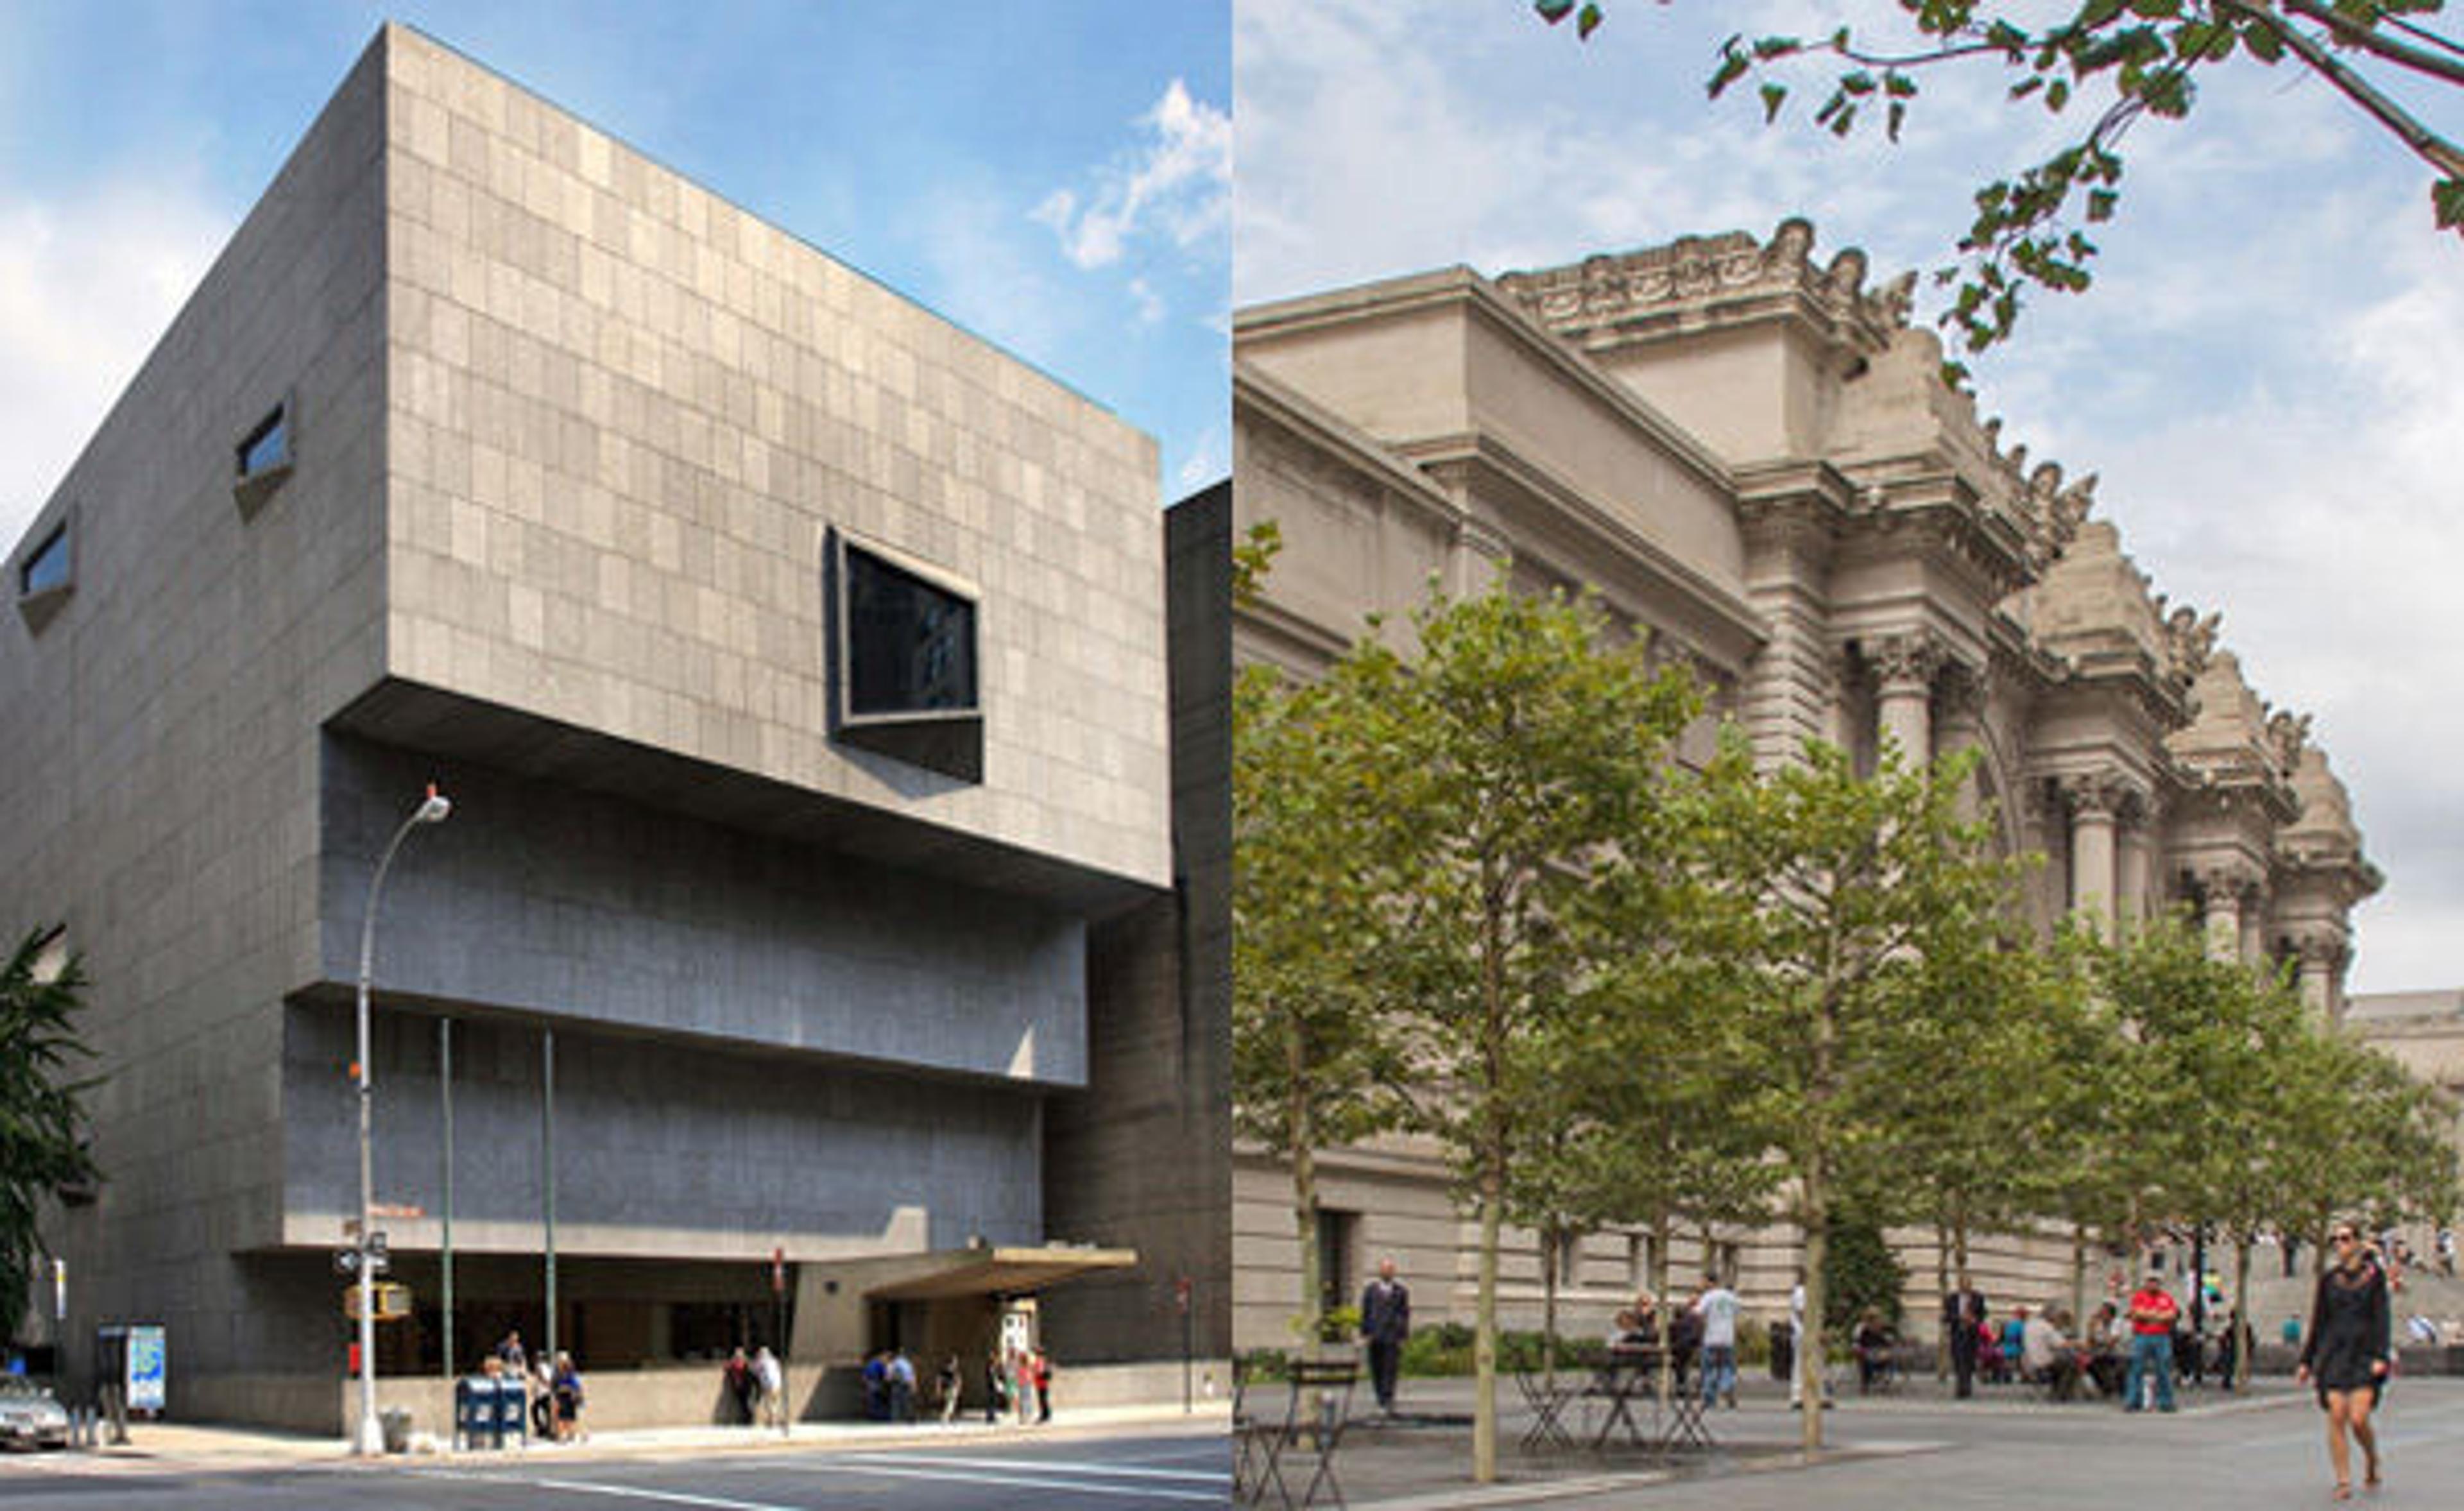 Left: The Met Breuer. Photo by Ed Lederman. Right: The Met Plaza © MMA